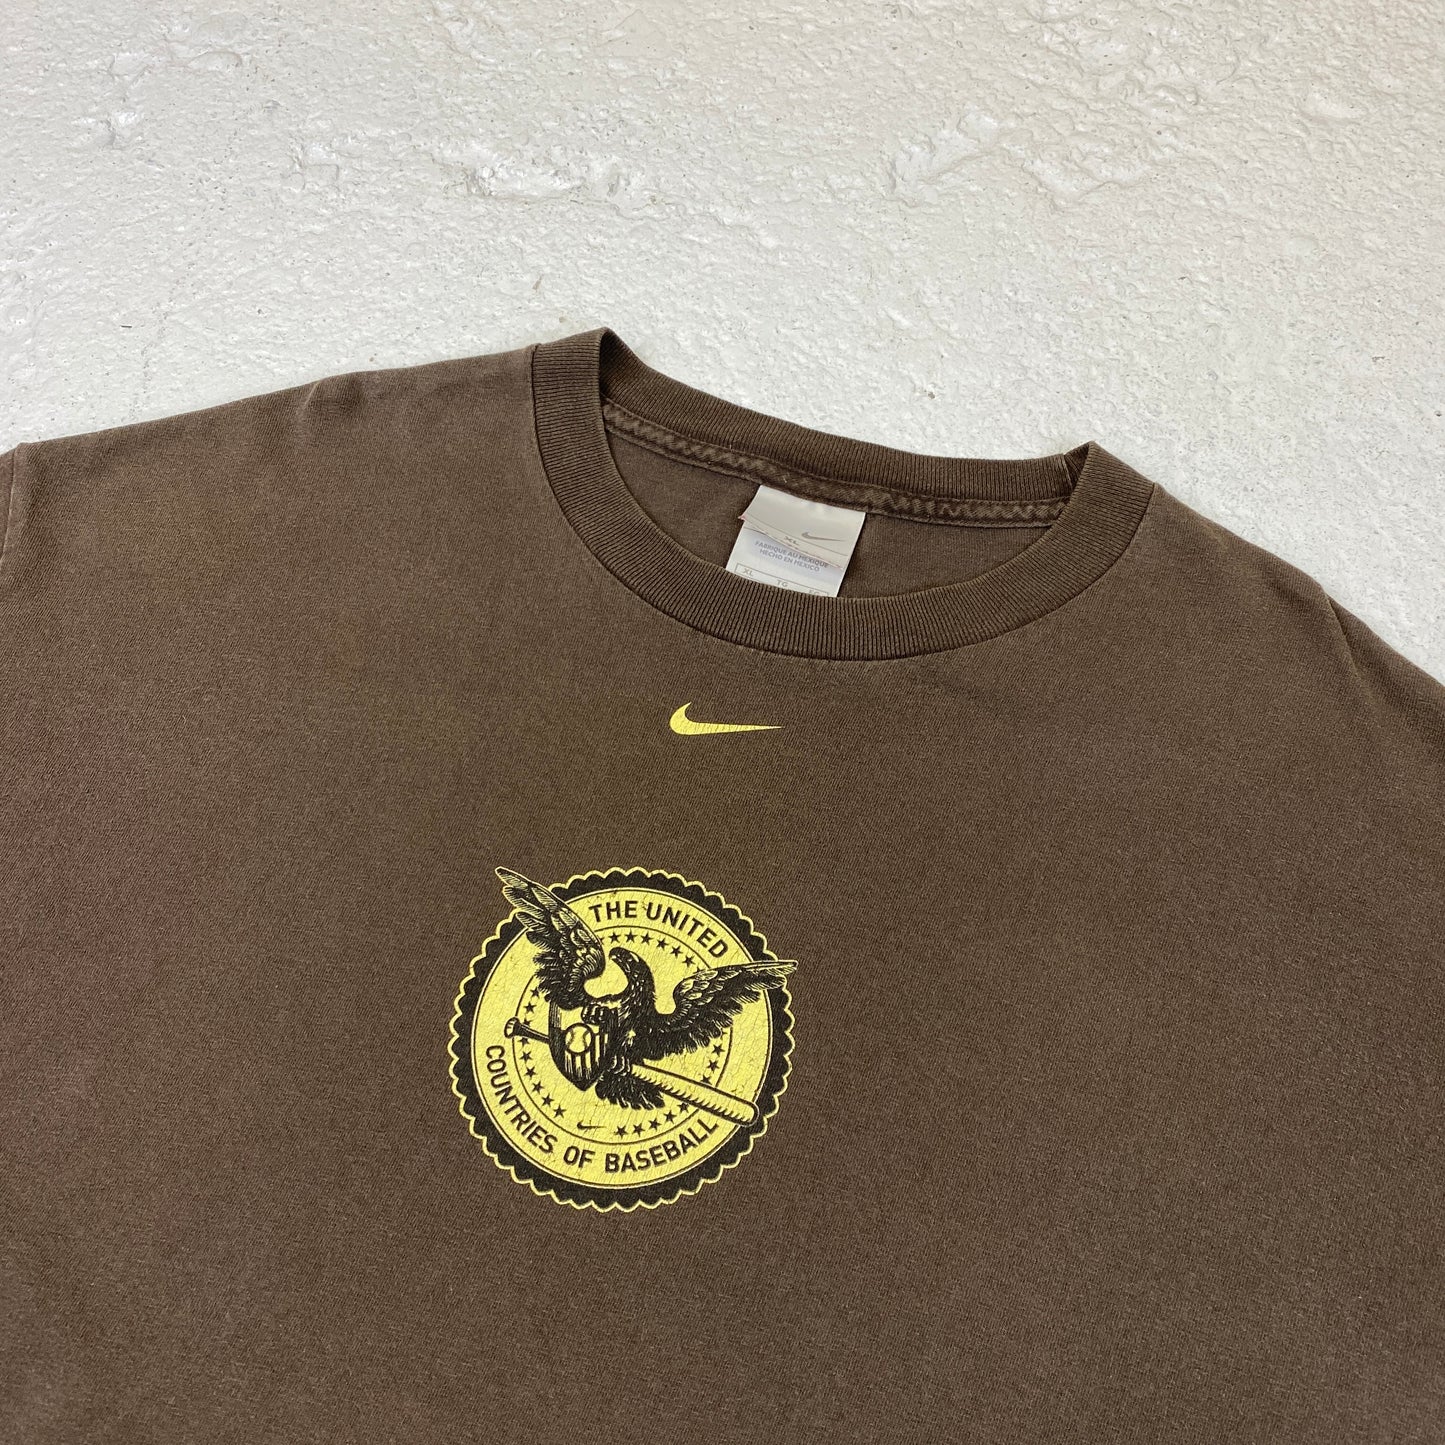 Nike RARE Countries of Baseball heavyweight washed brown t-shirt (L-XL)